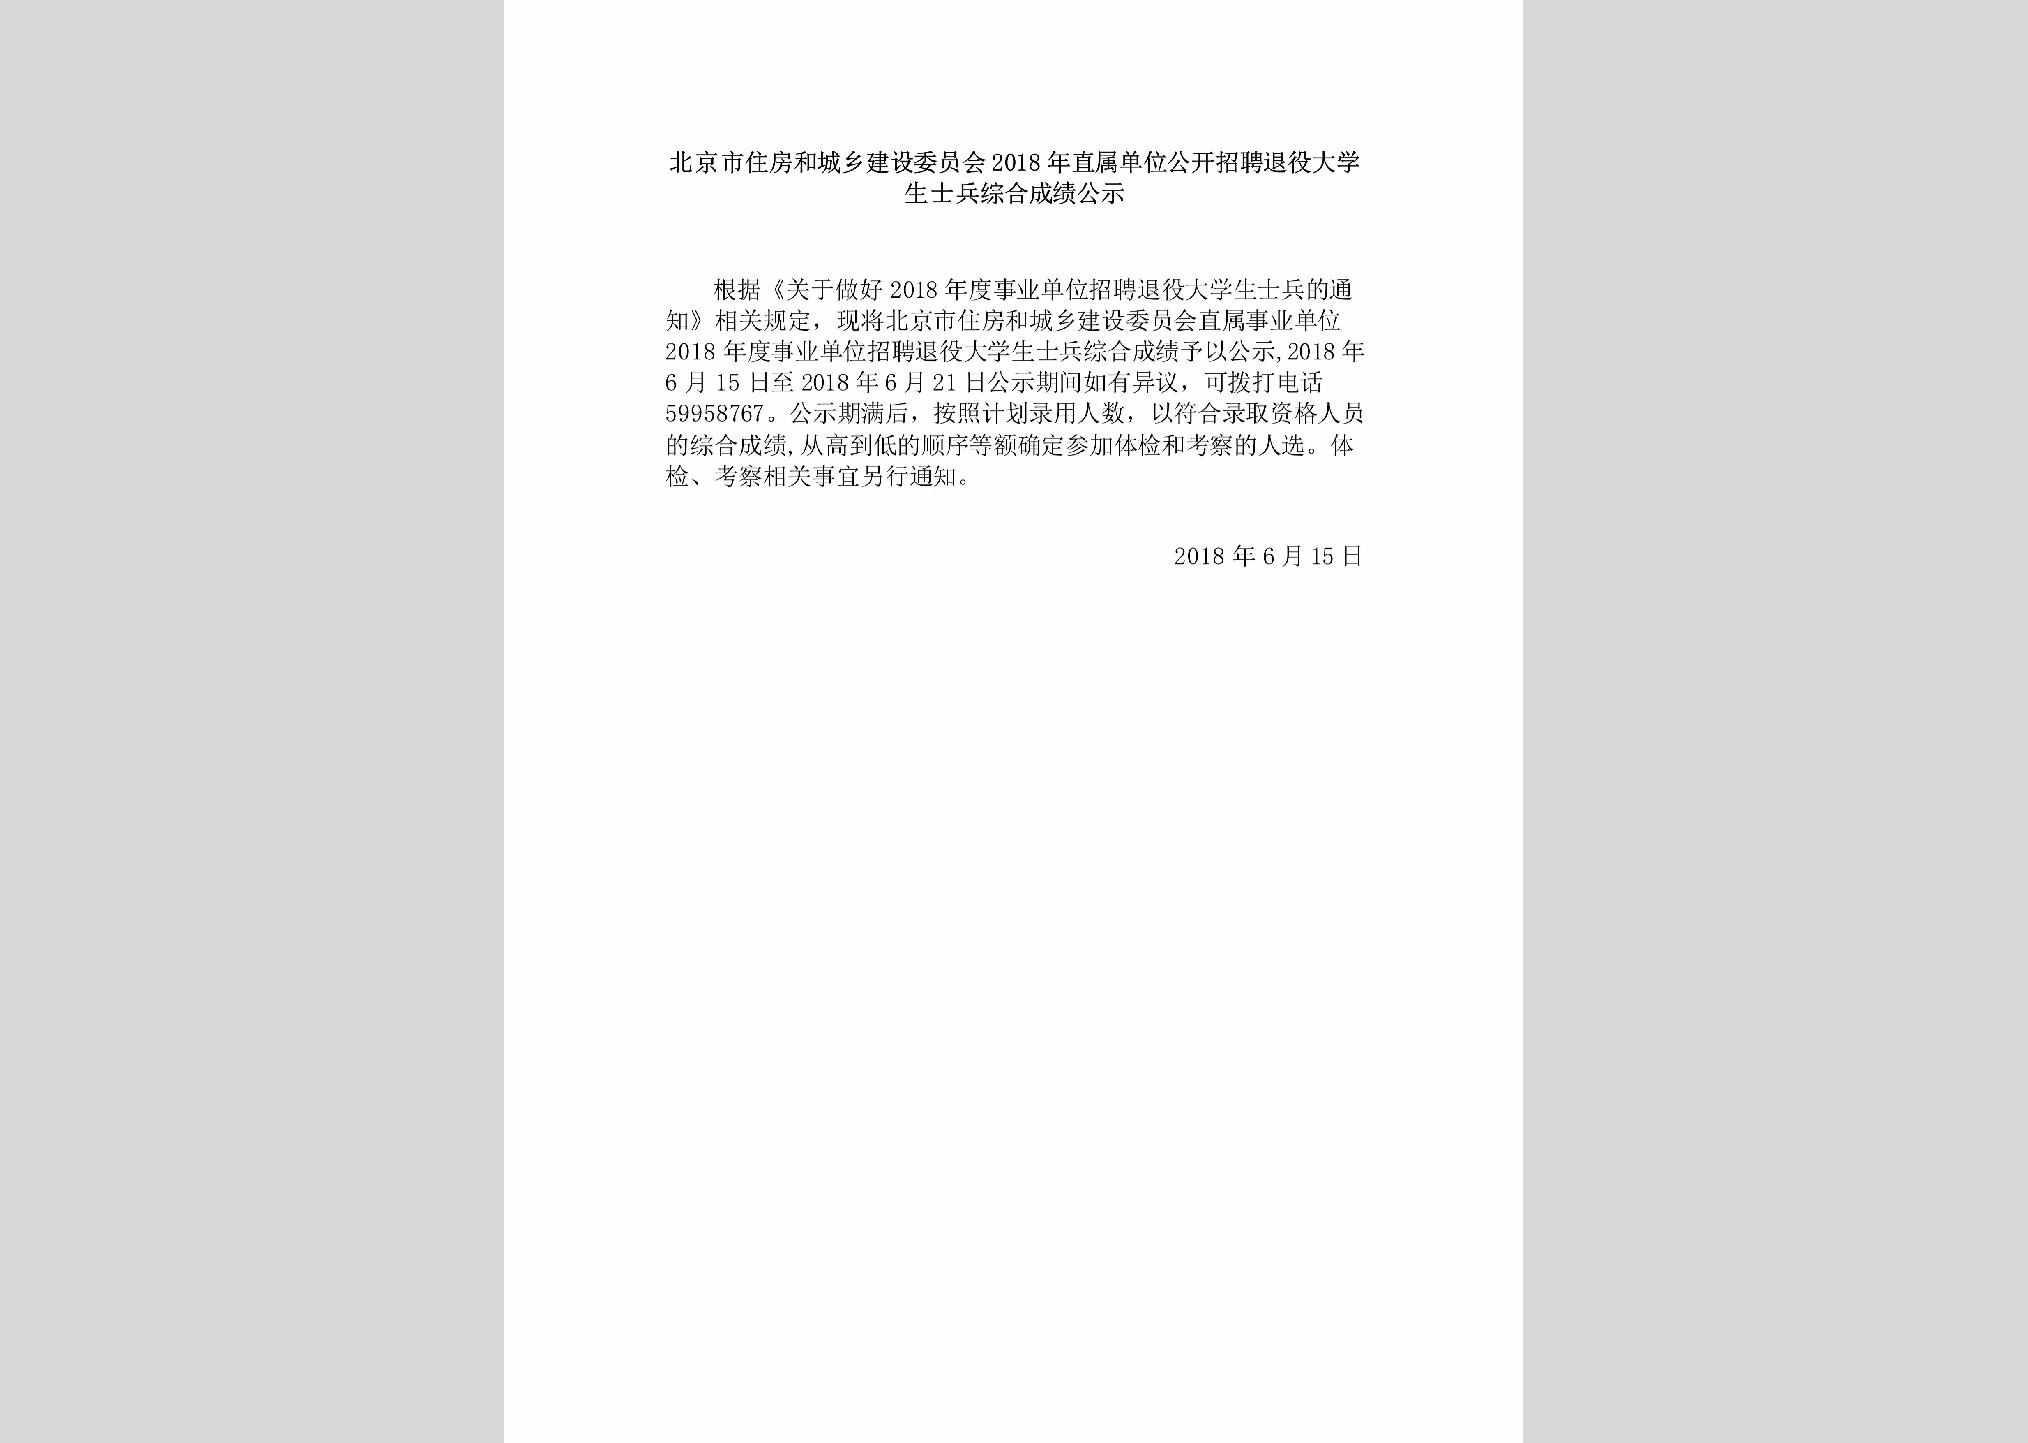 BJ-GKZPTYGS-2018：北京市住房和城乡建设委员会2018年直属单位公开招聘退役大学生士兵综合成绩公示